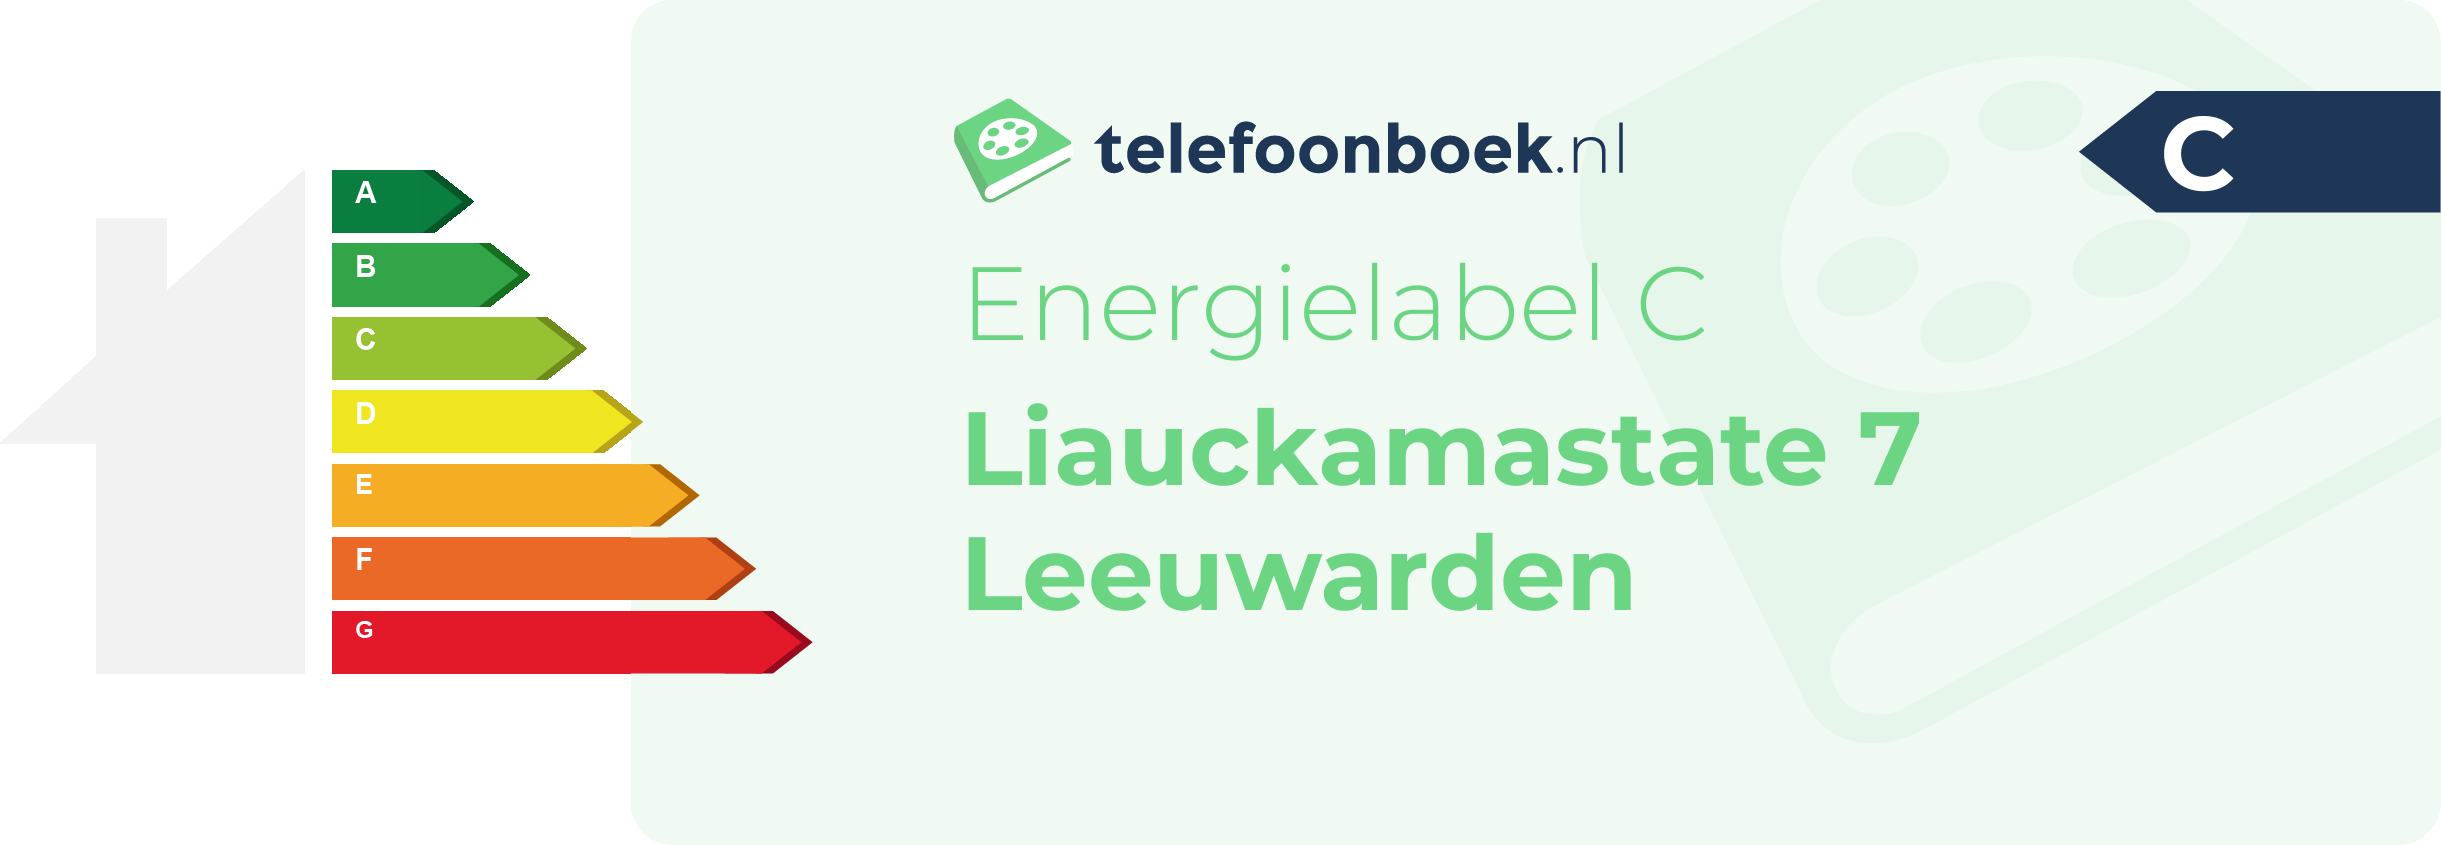 Energielabel Liauckamastate 7 Leeuwarden